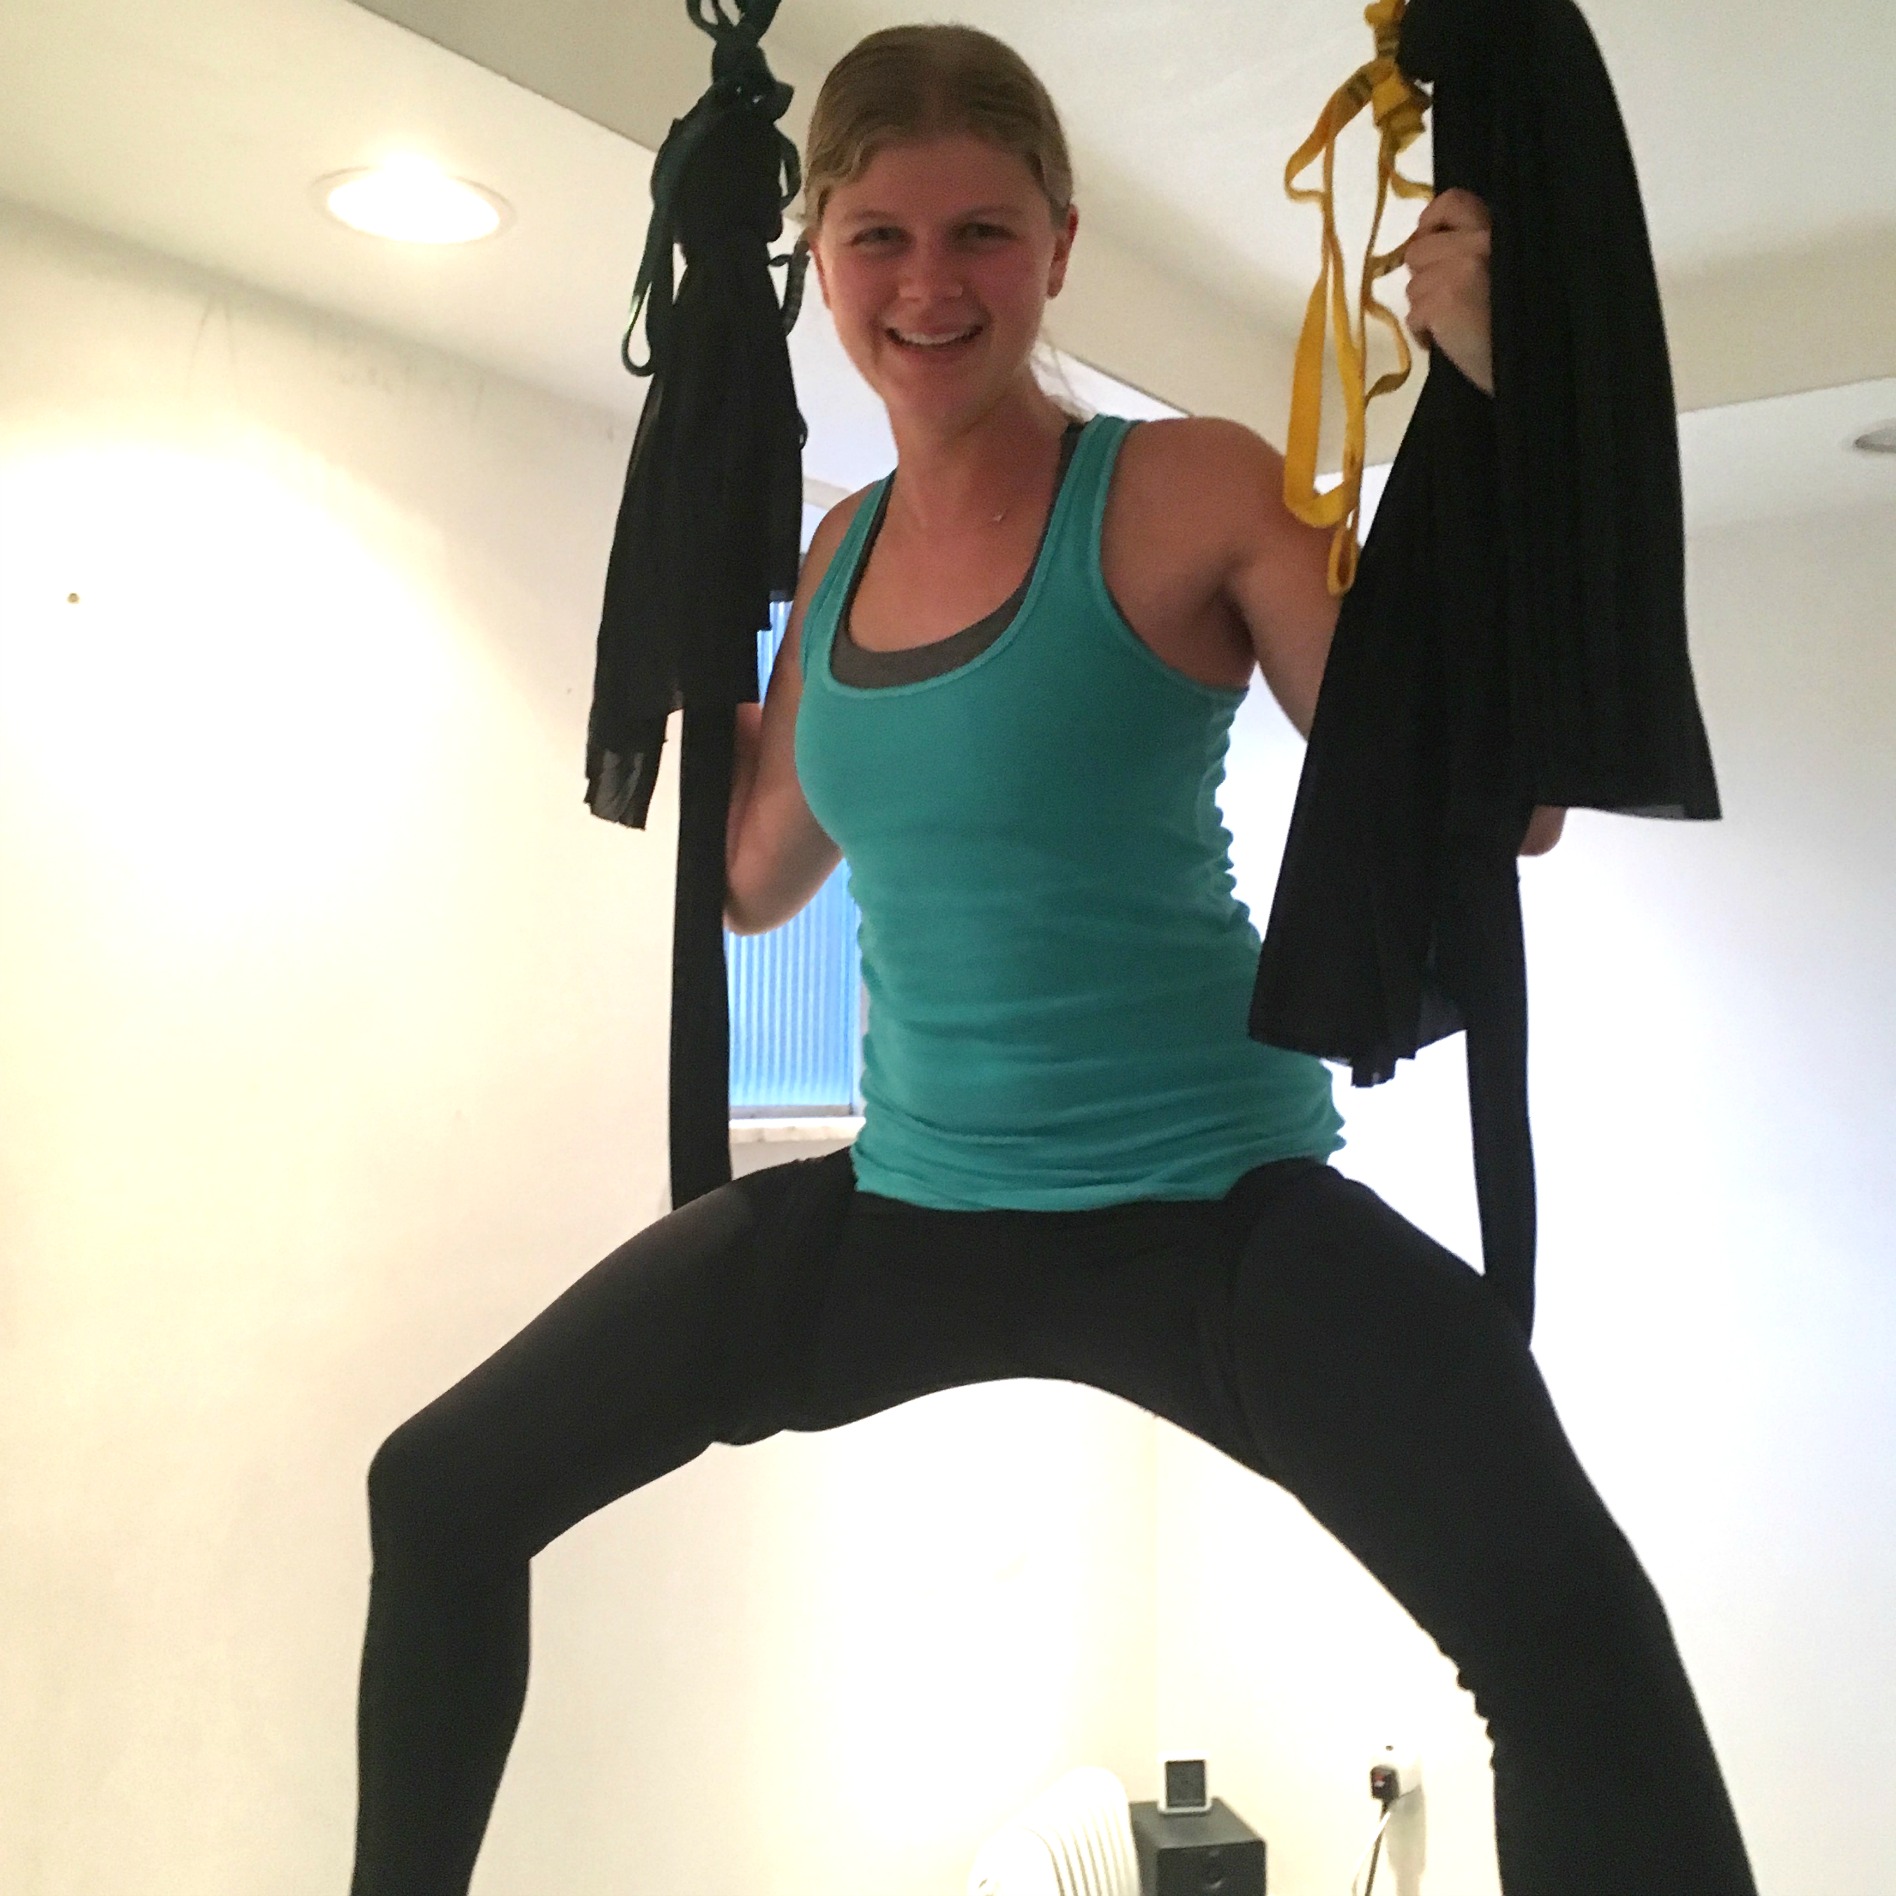 Aqua Yoga: Finding the Goddess - Well Balanced Women